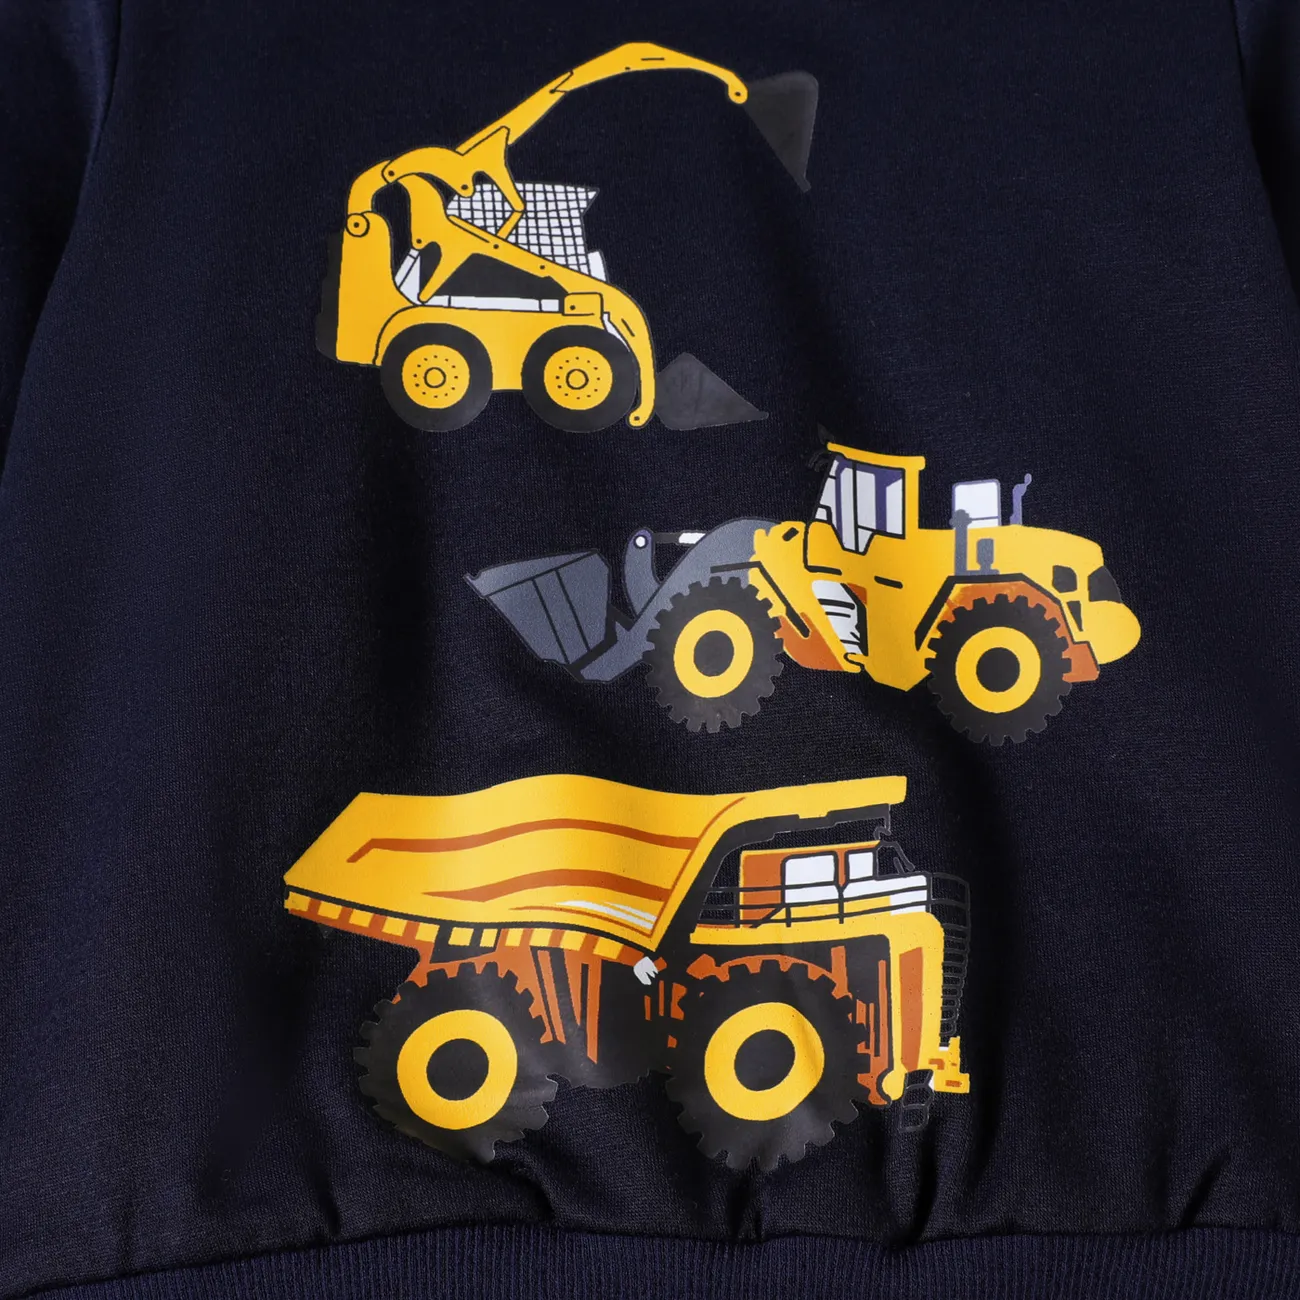 Toddler Boy Vehicle Excavator Print Dark Blue Pullover Sweatshirt DeepSapphireBlue big image 1